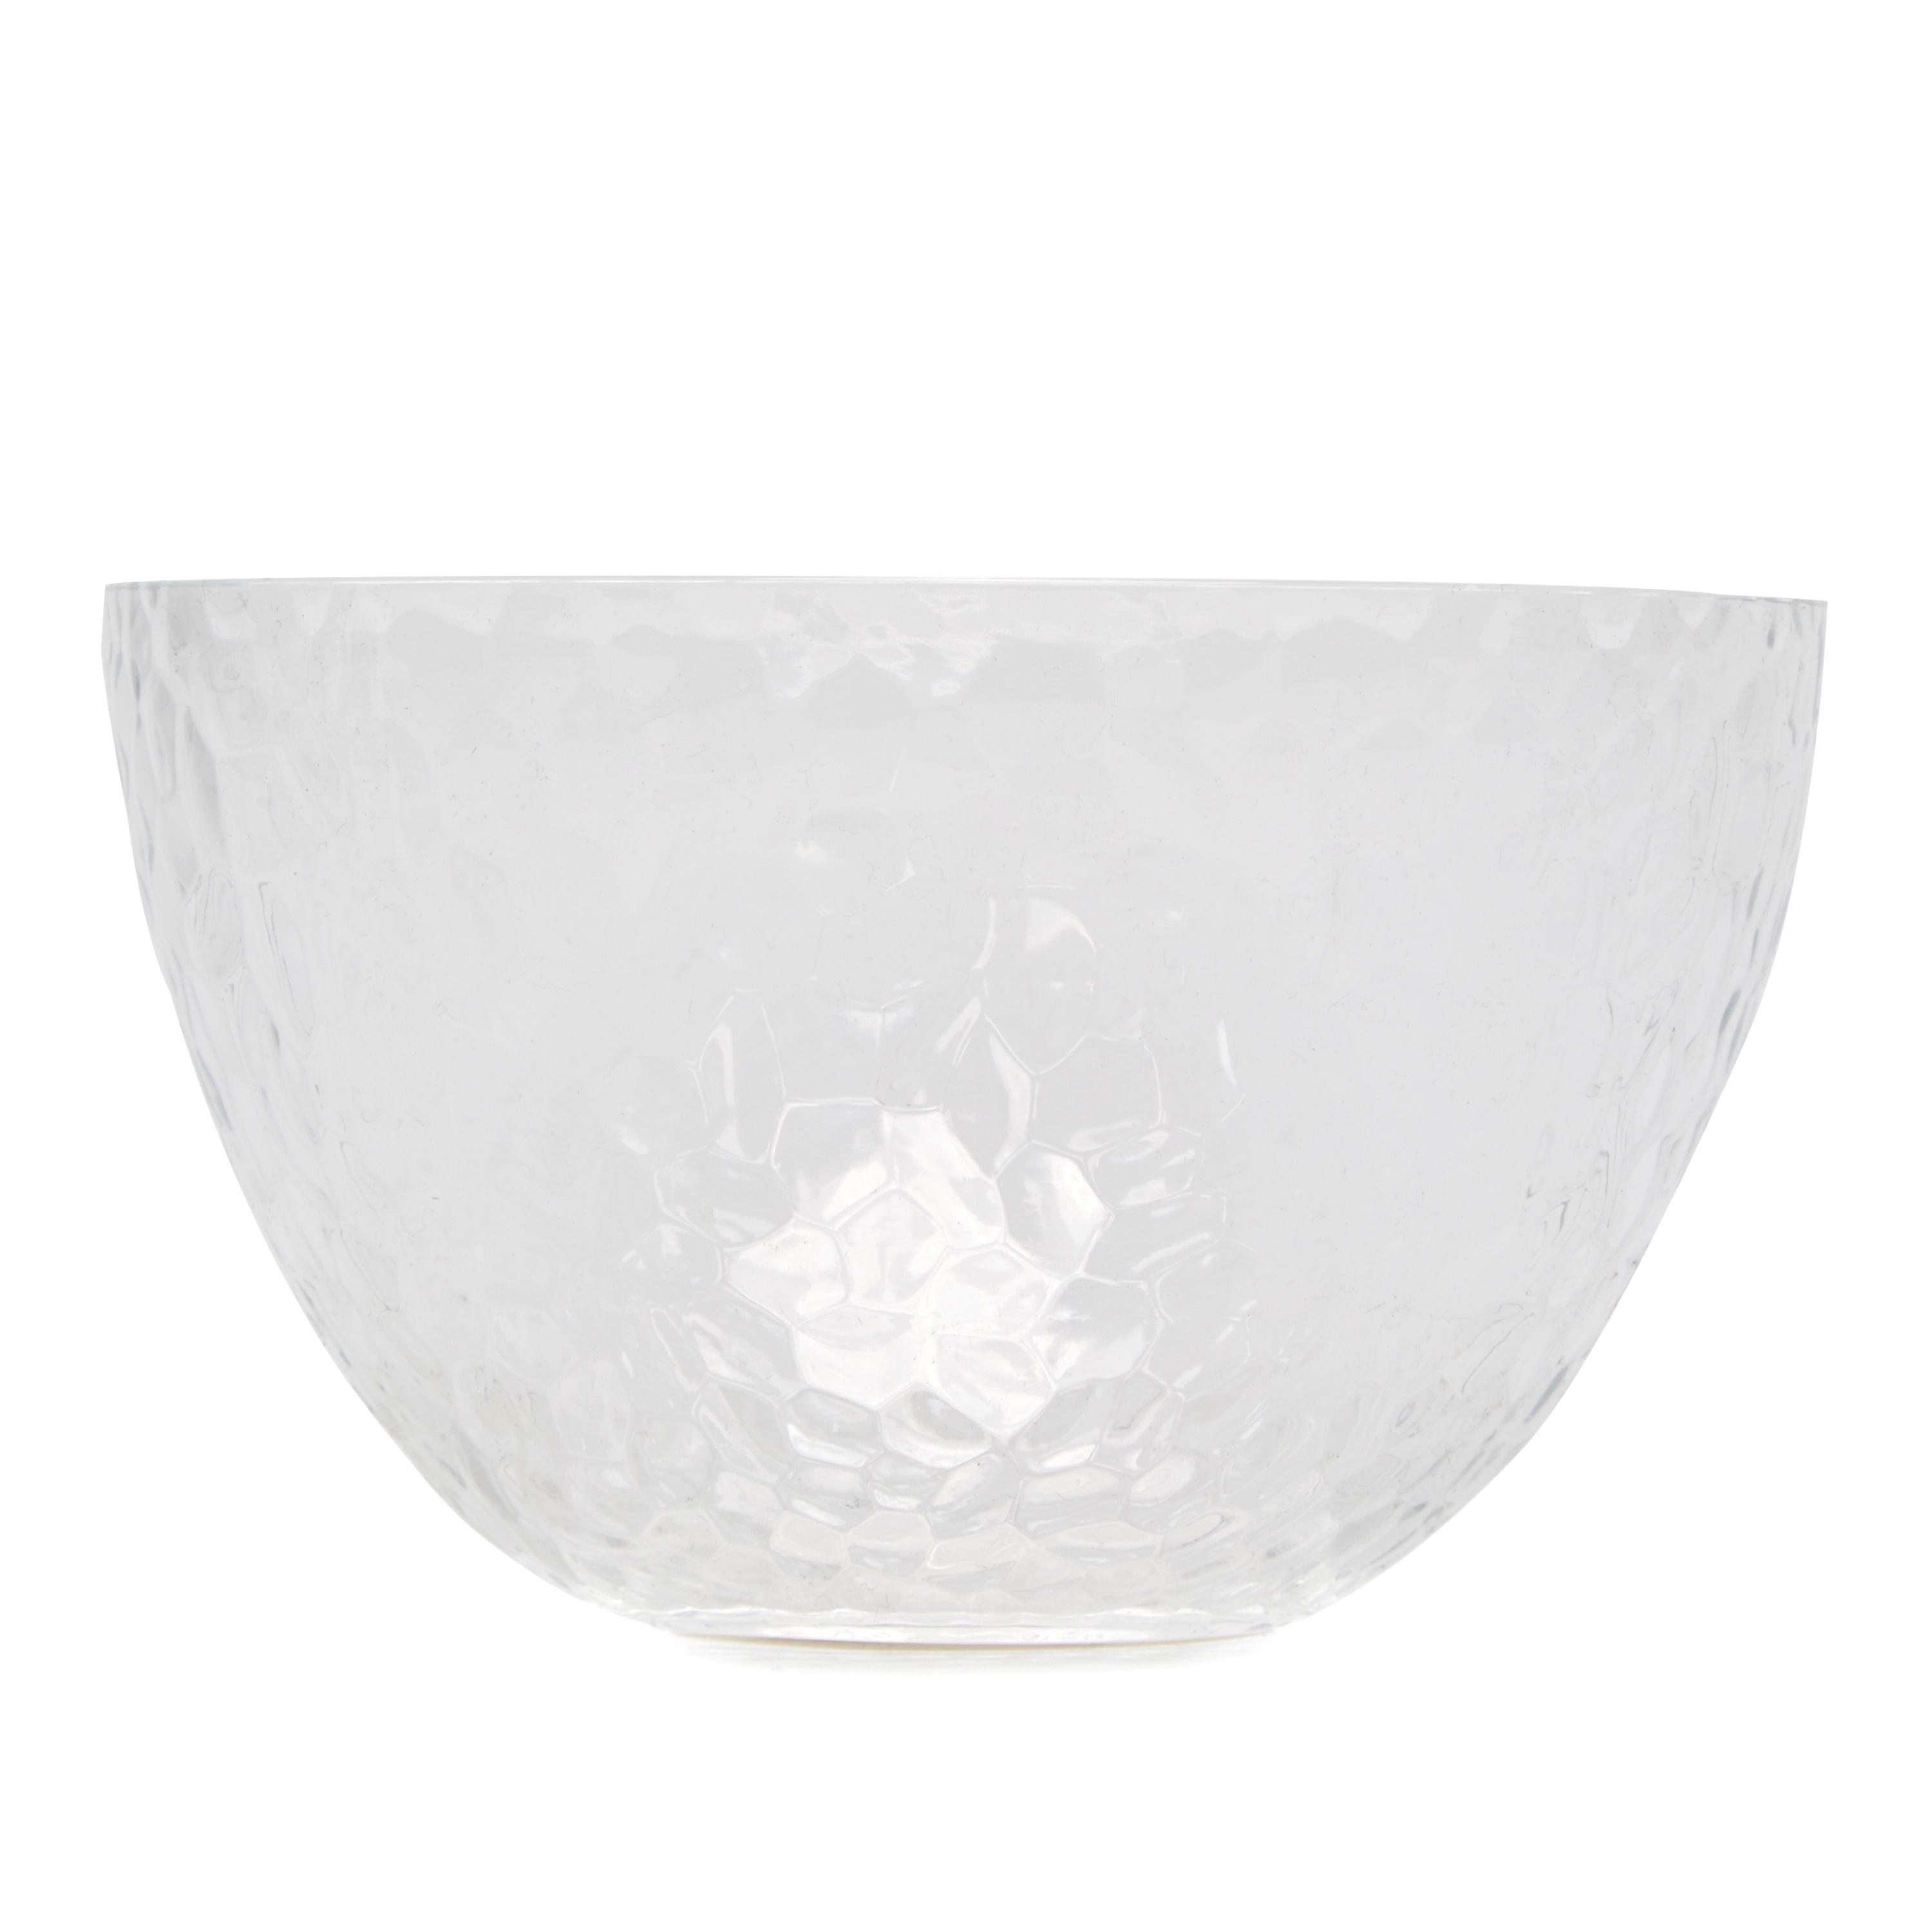 Photo of Wham dimpled bowl - white- white